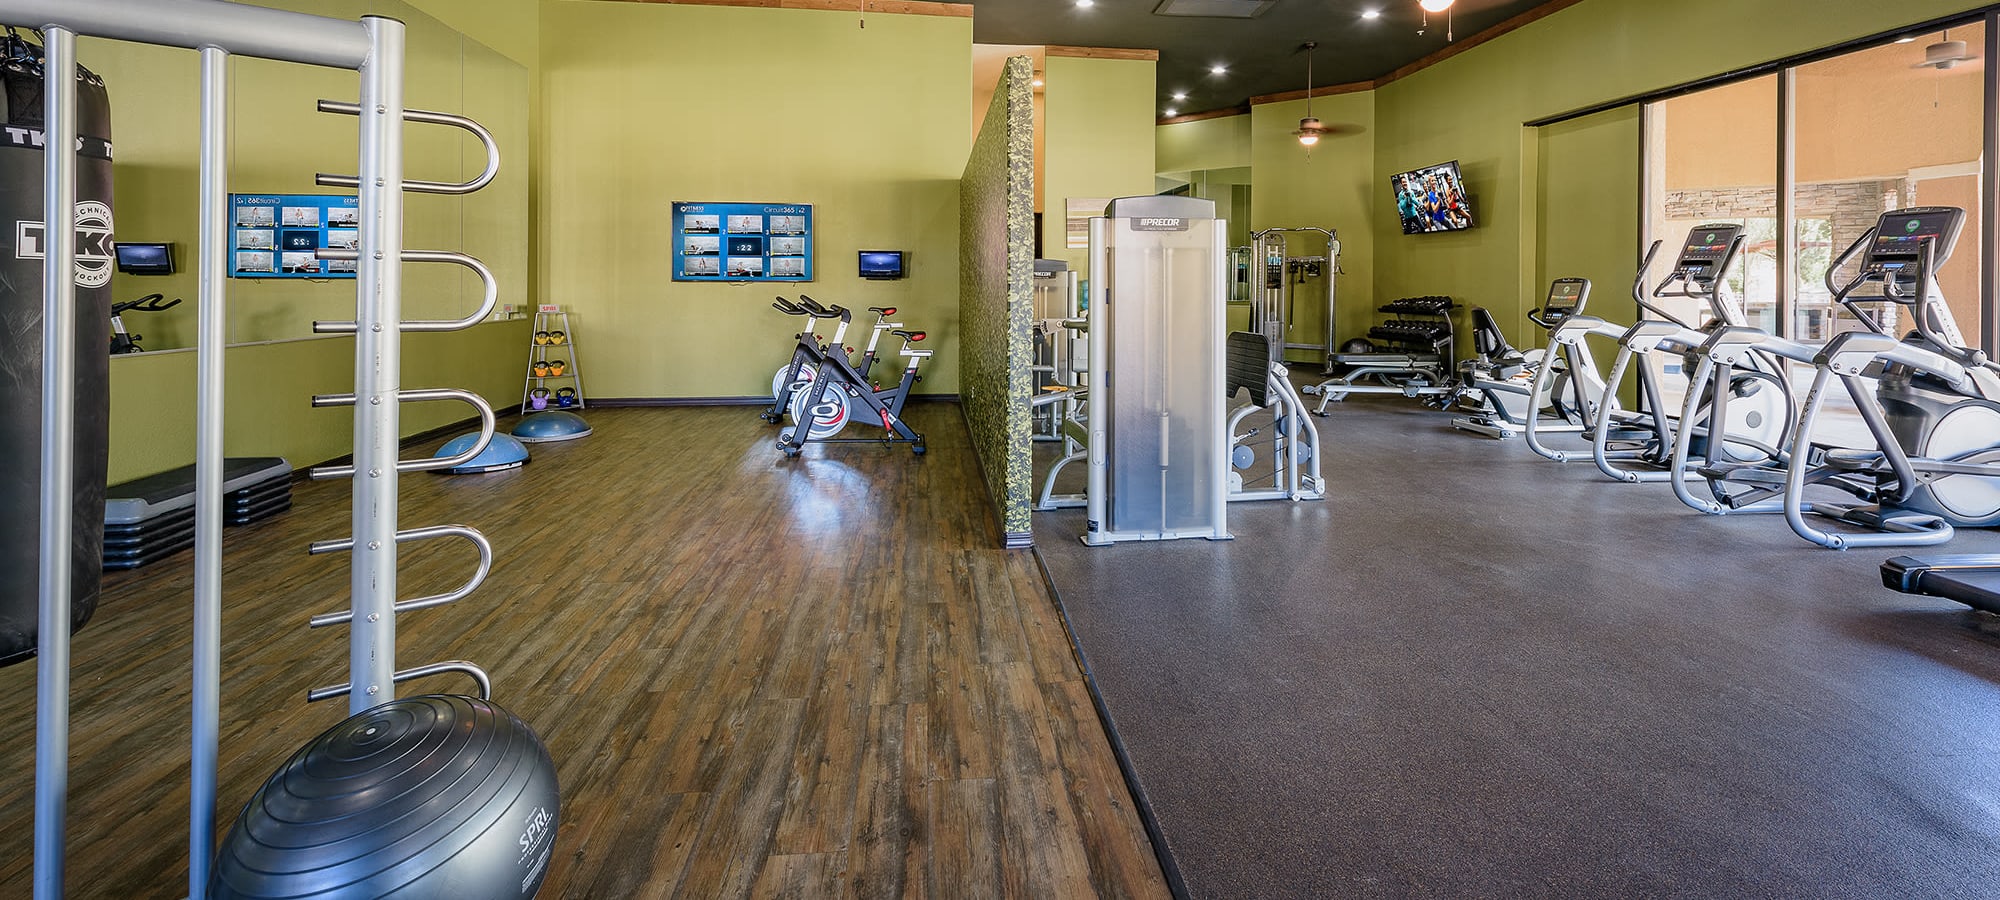 Fitness center at Stone Oaks in Chandler, Arizona